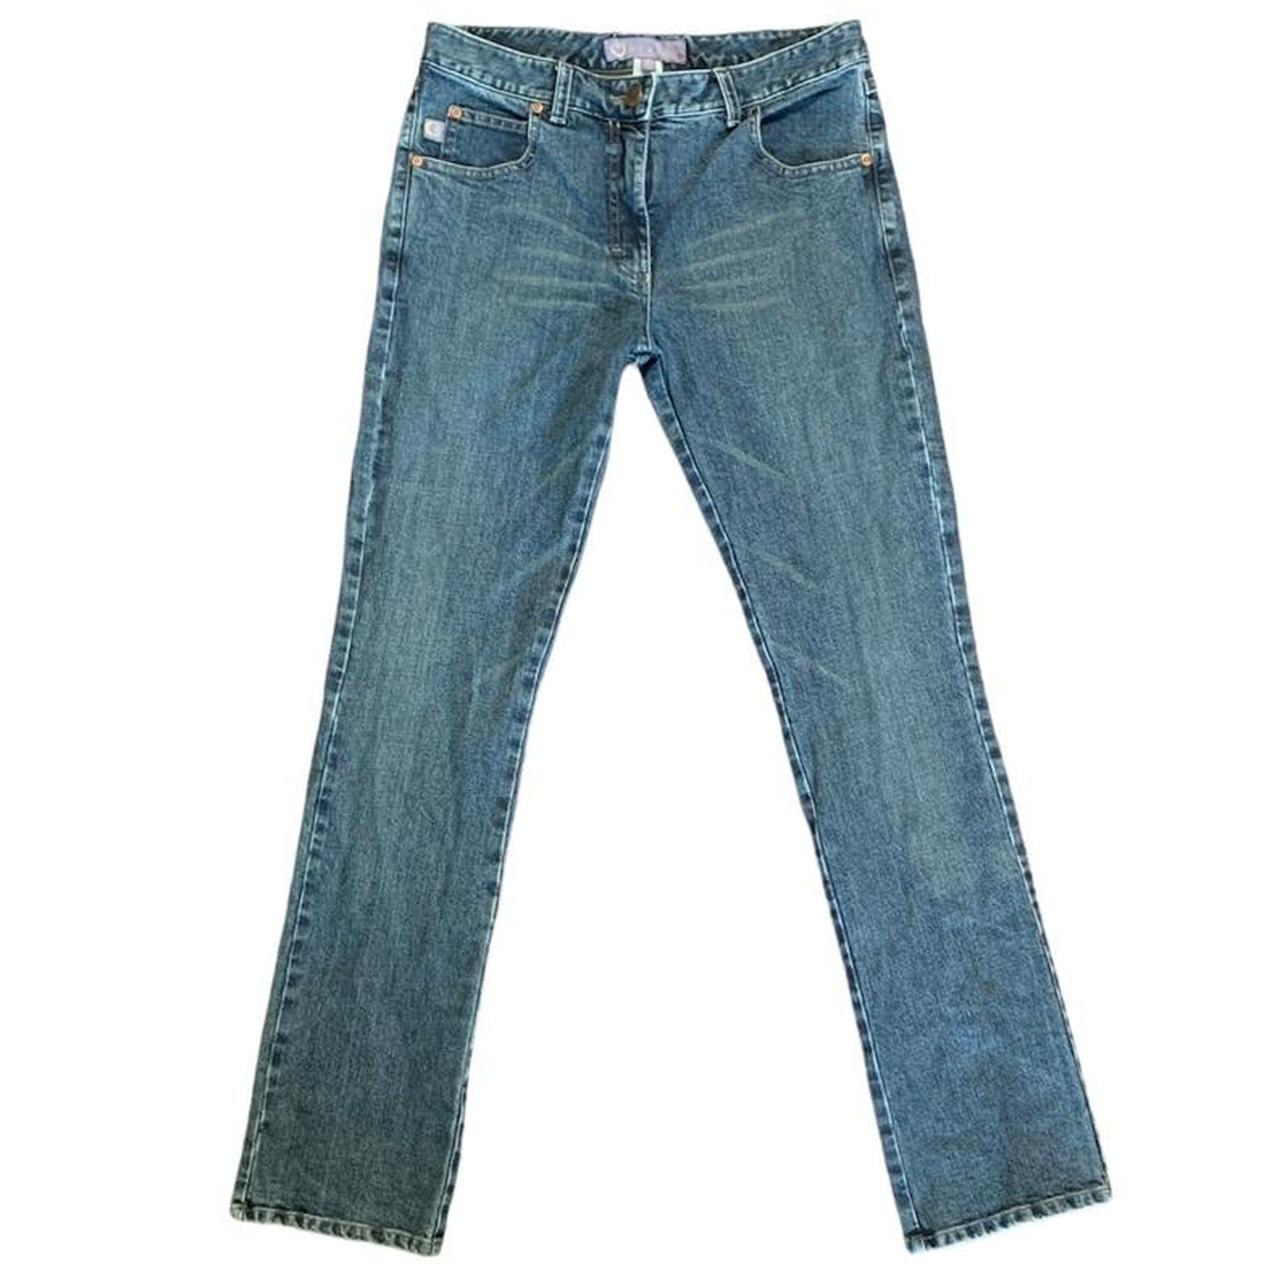 STUSSY Jeans. Straight leg basic jeans in great... - Depop